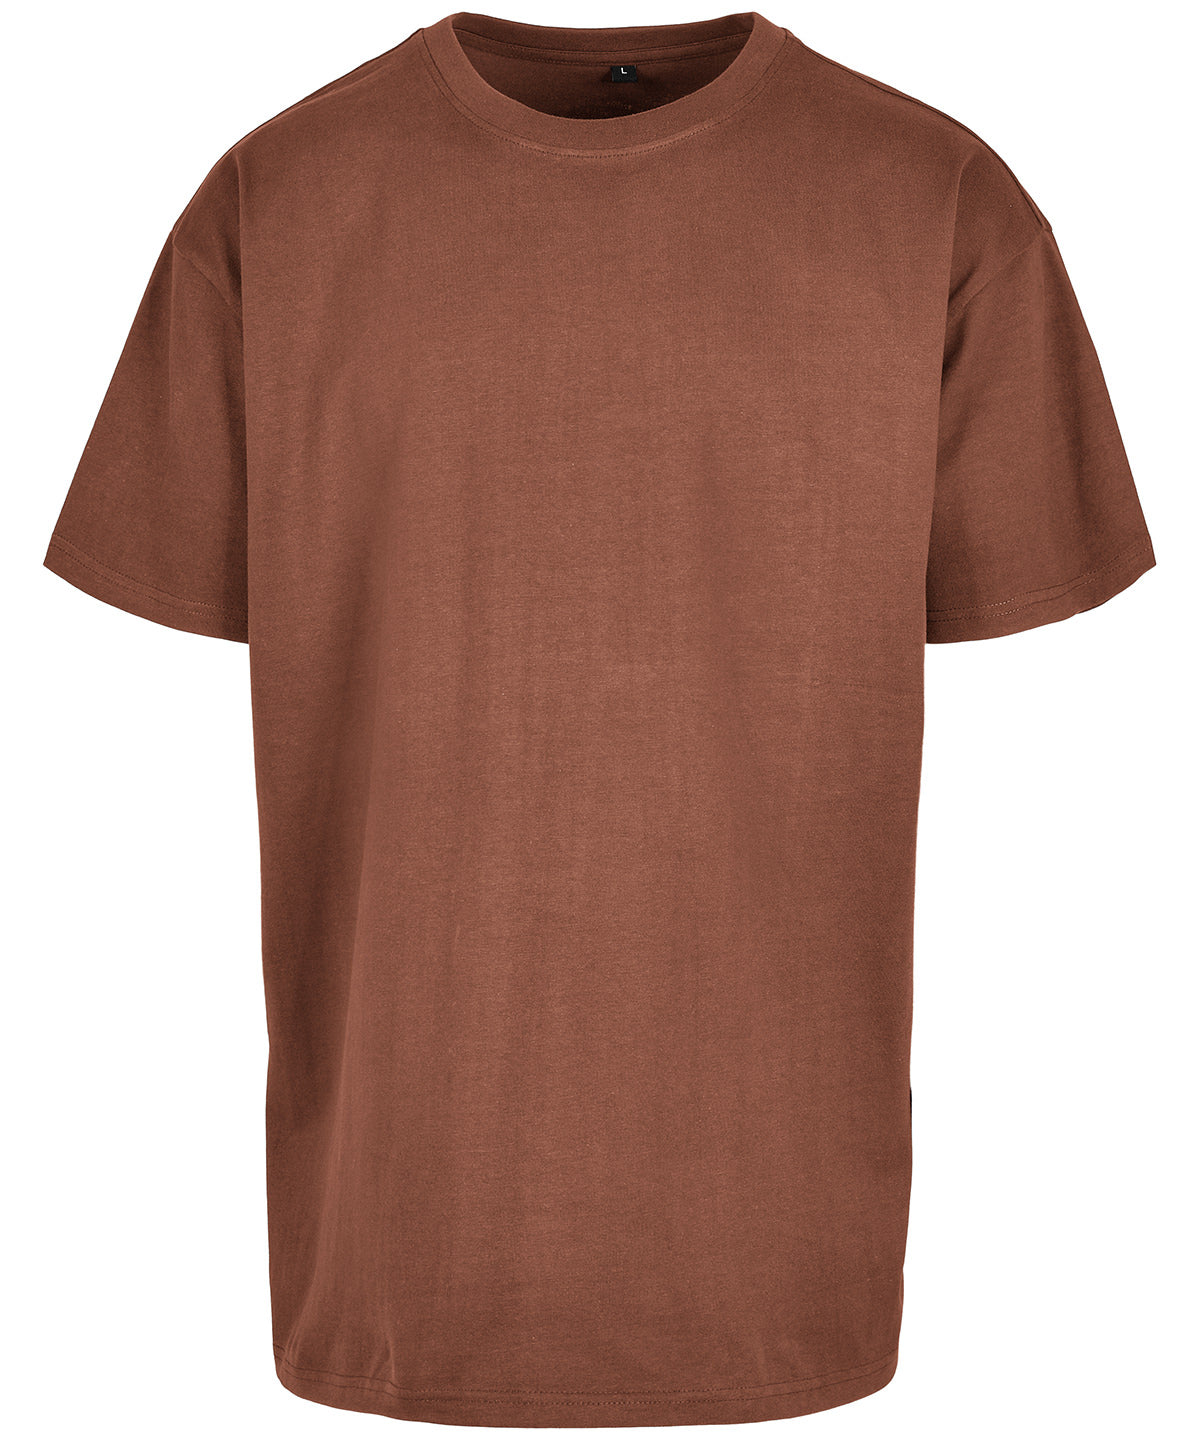 Personalised T-Shirts - Light Orange Build Your Brand Heavy oversized tee